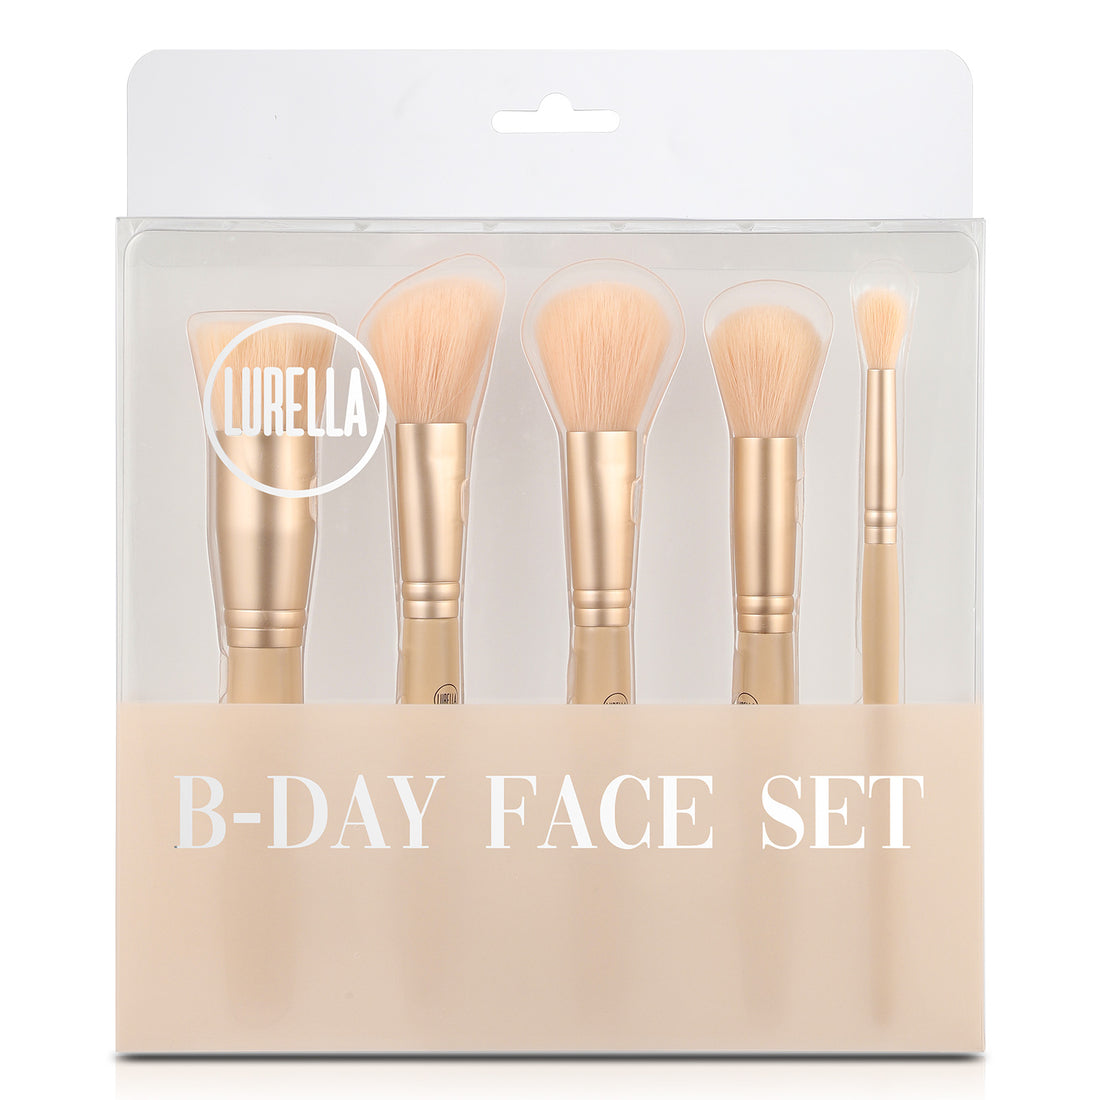 B-DAY Face Set